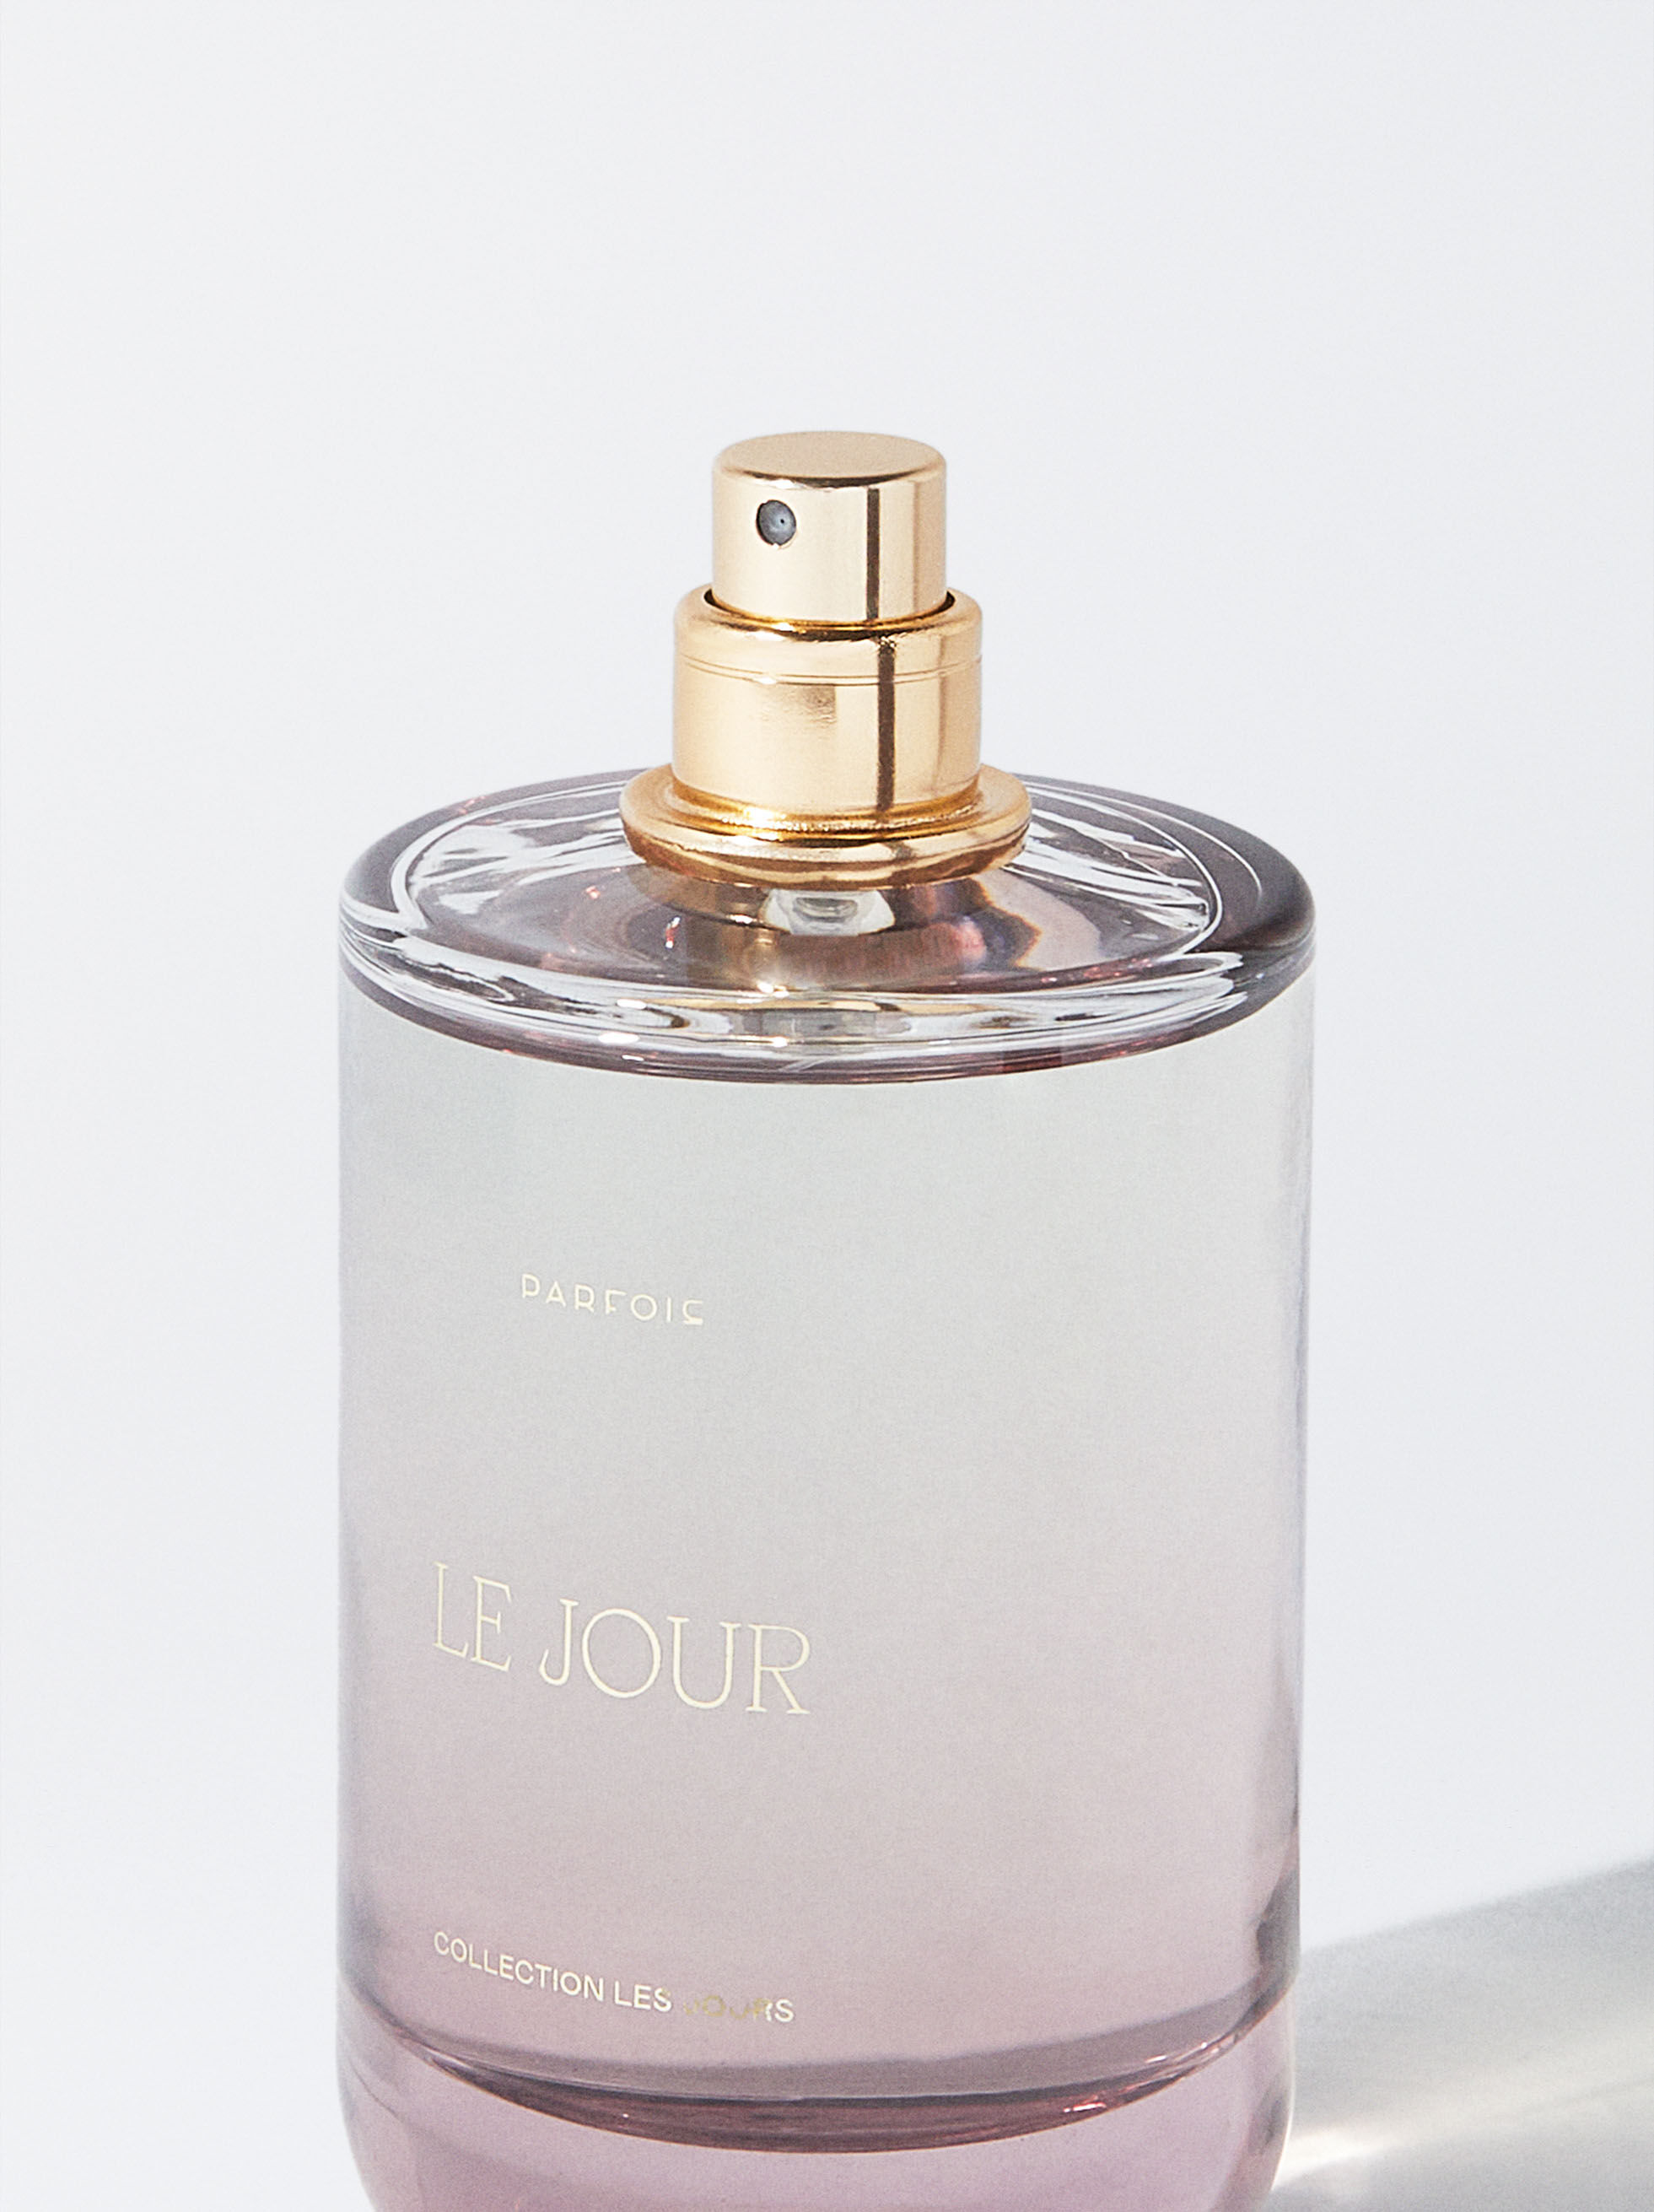 Perfume Le Jour - 100ml - Spicy Mujer - - parfois.com